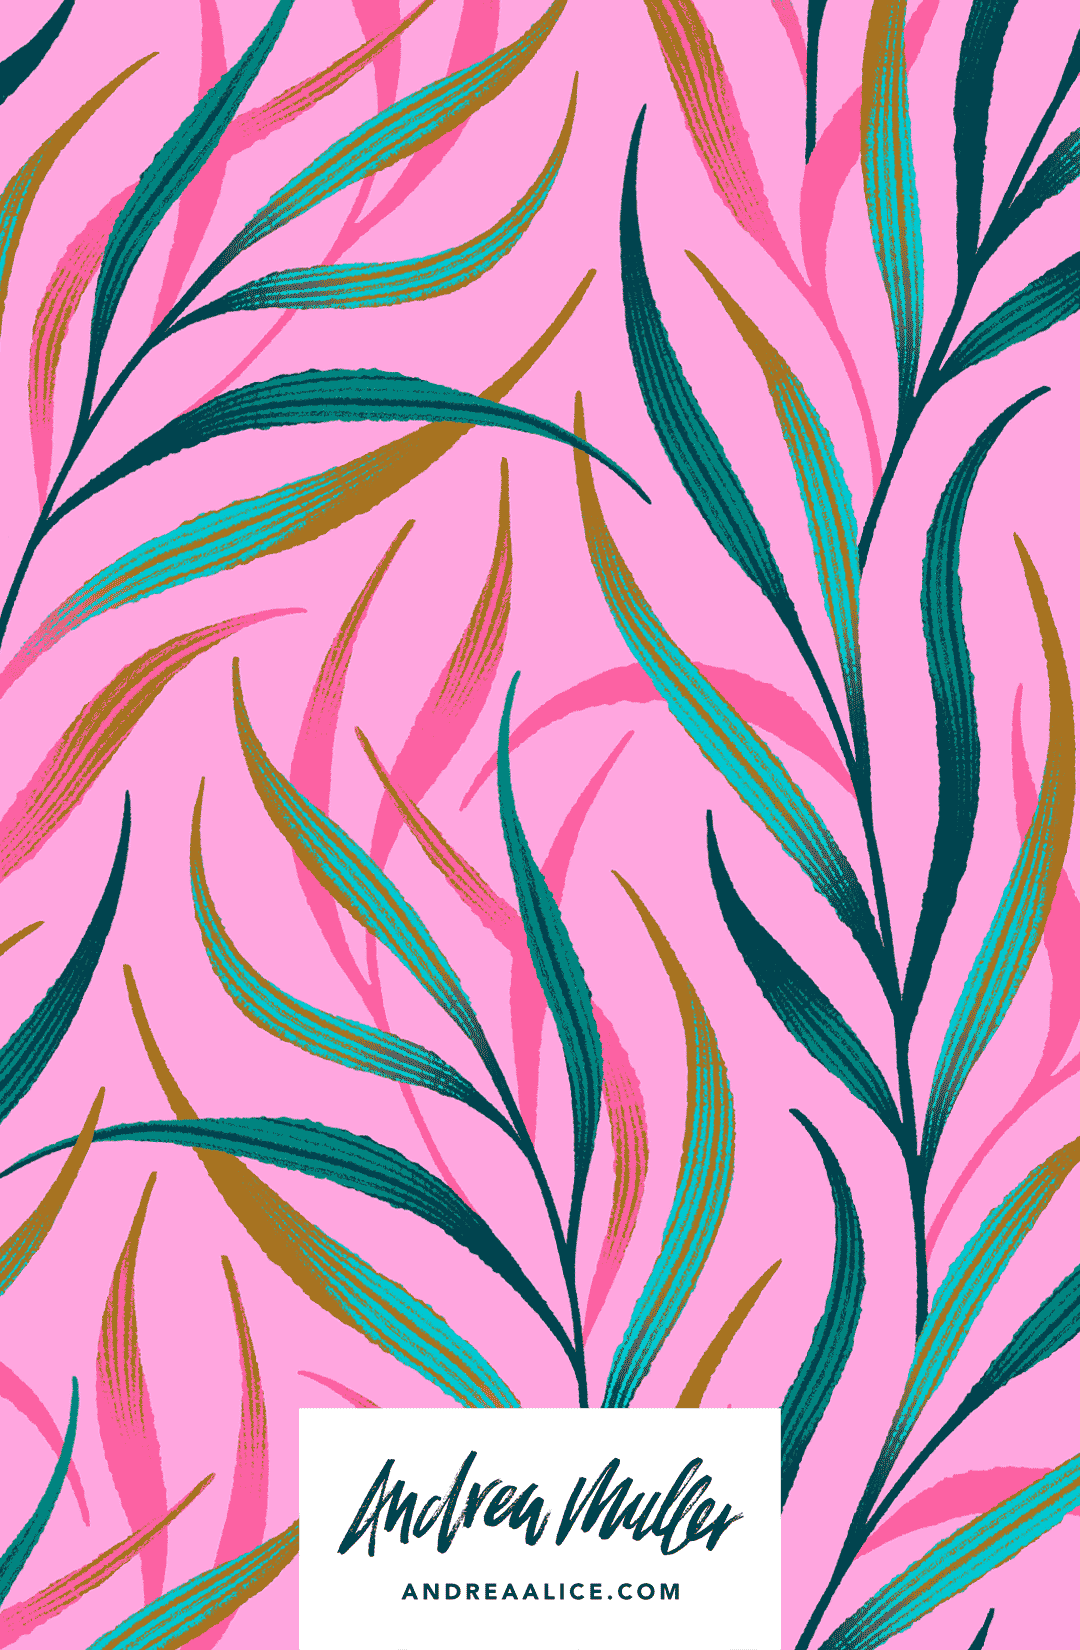 Pink wavy palm leaf pattern illustration by Andrea Muller